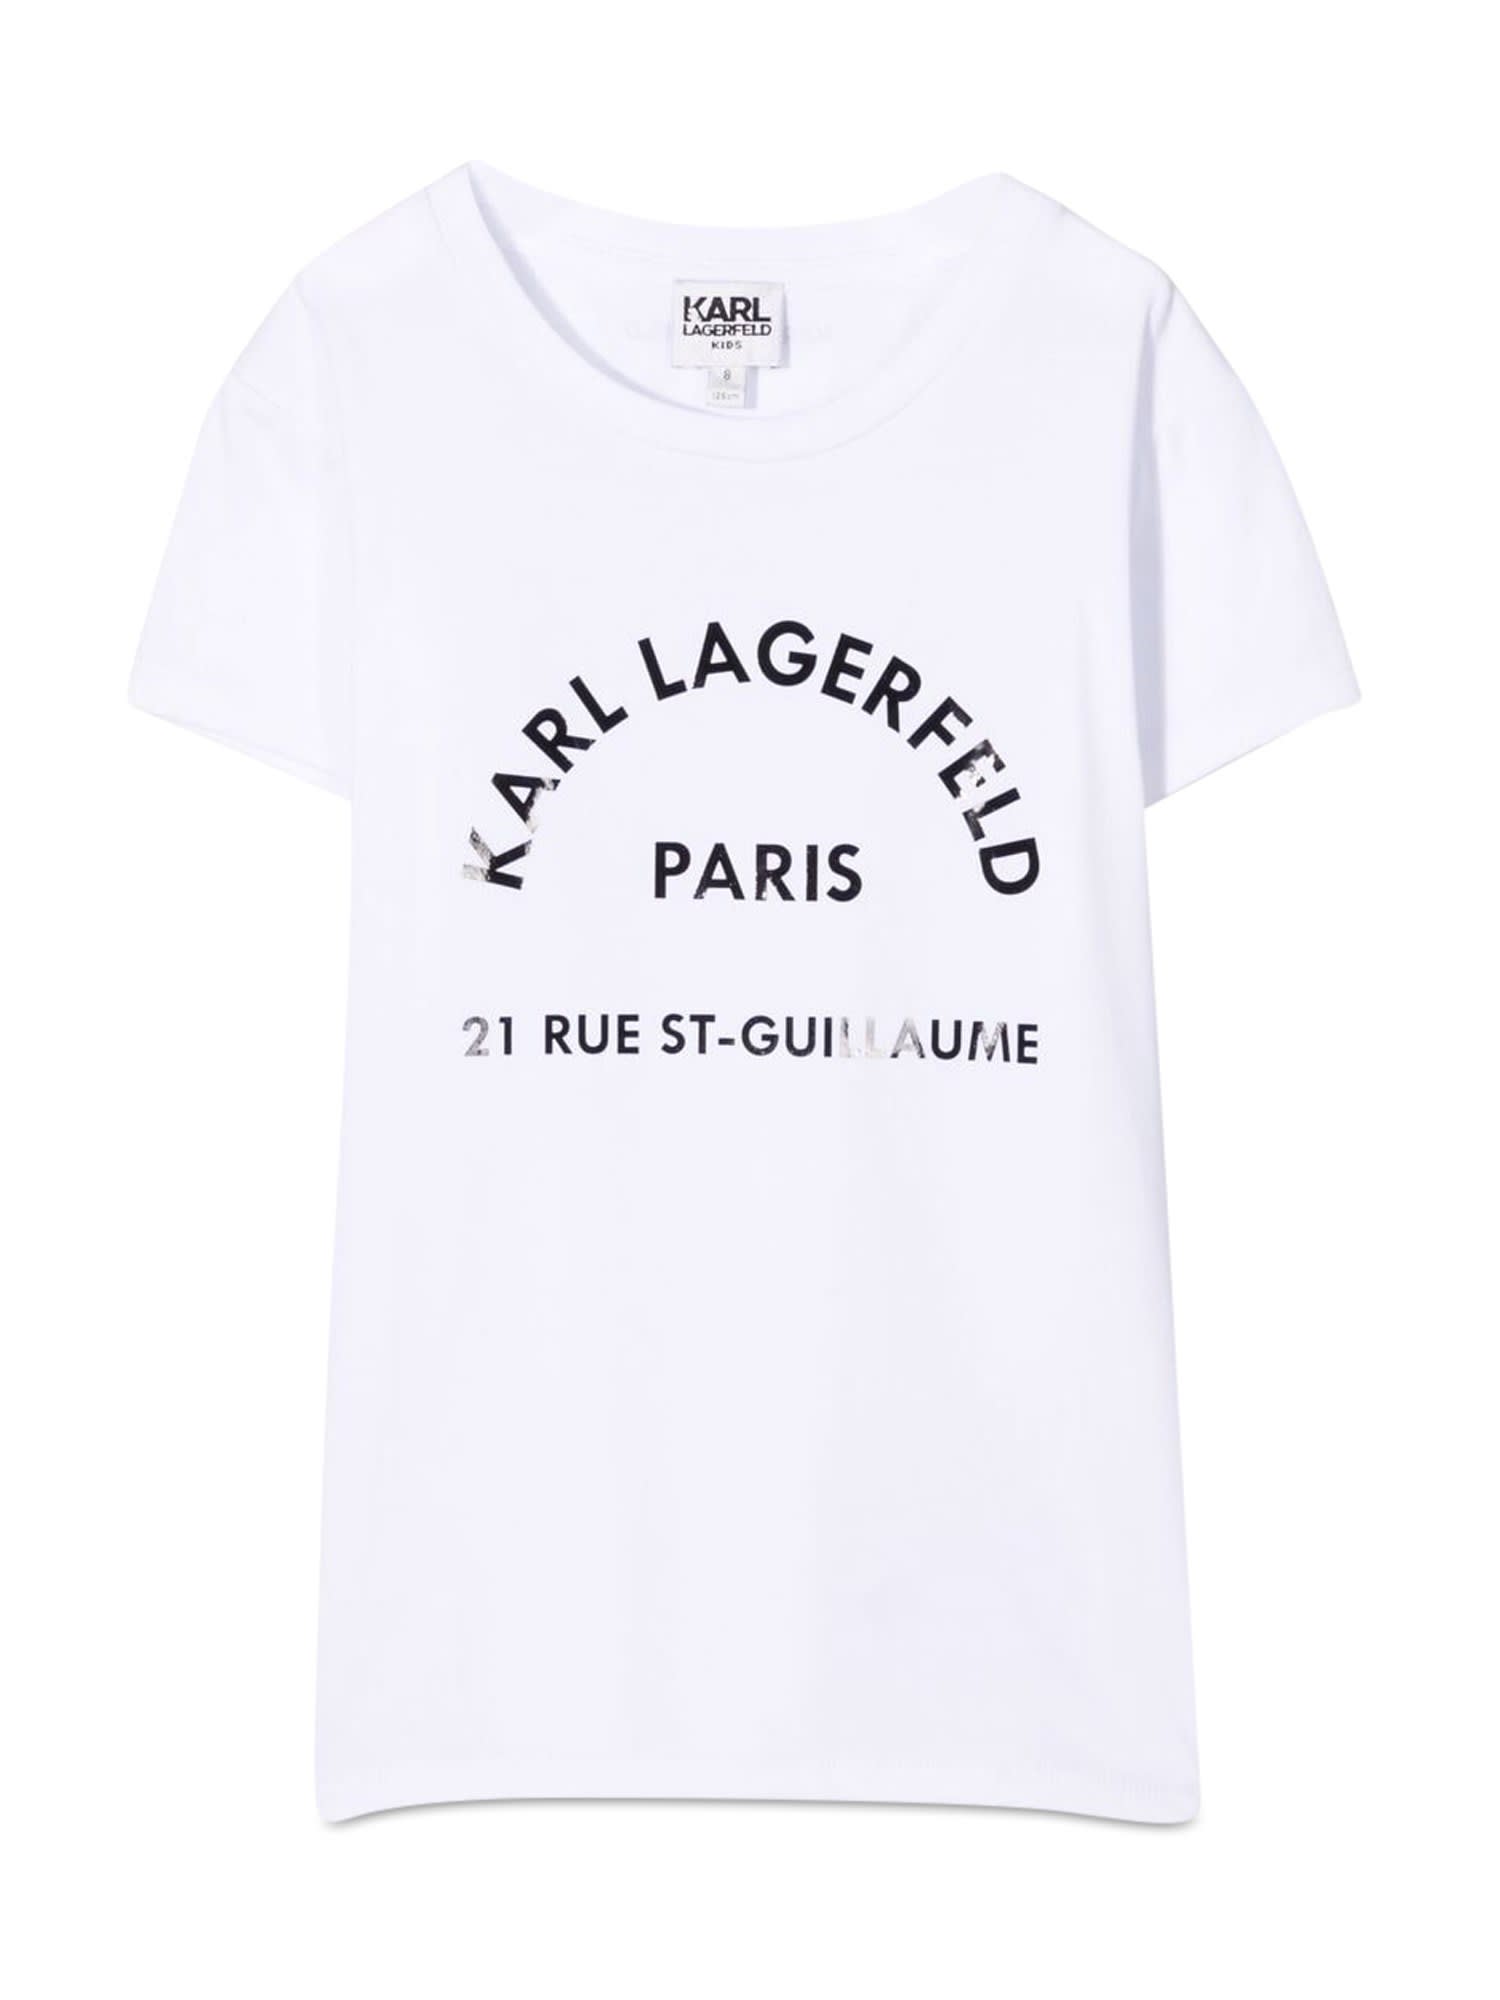 Karl Lagerfeld Tee Shirt